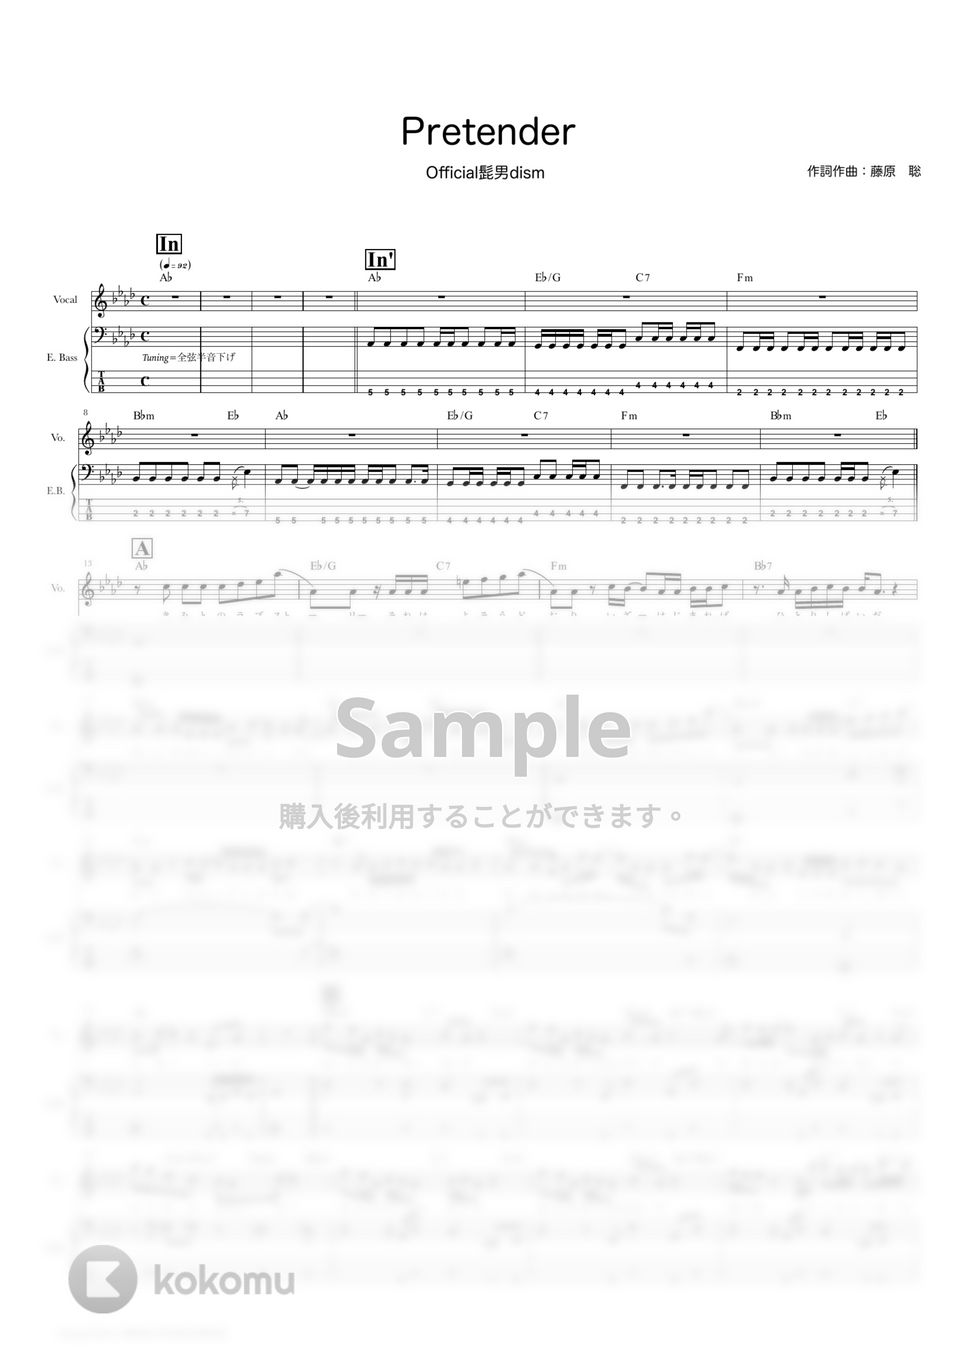 Official髭男dism - Pretender (ベーススコア・歌詞・コード付き) by TRIAD GUITAR SCHOOL